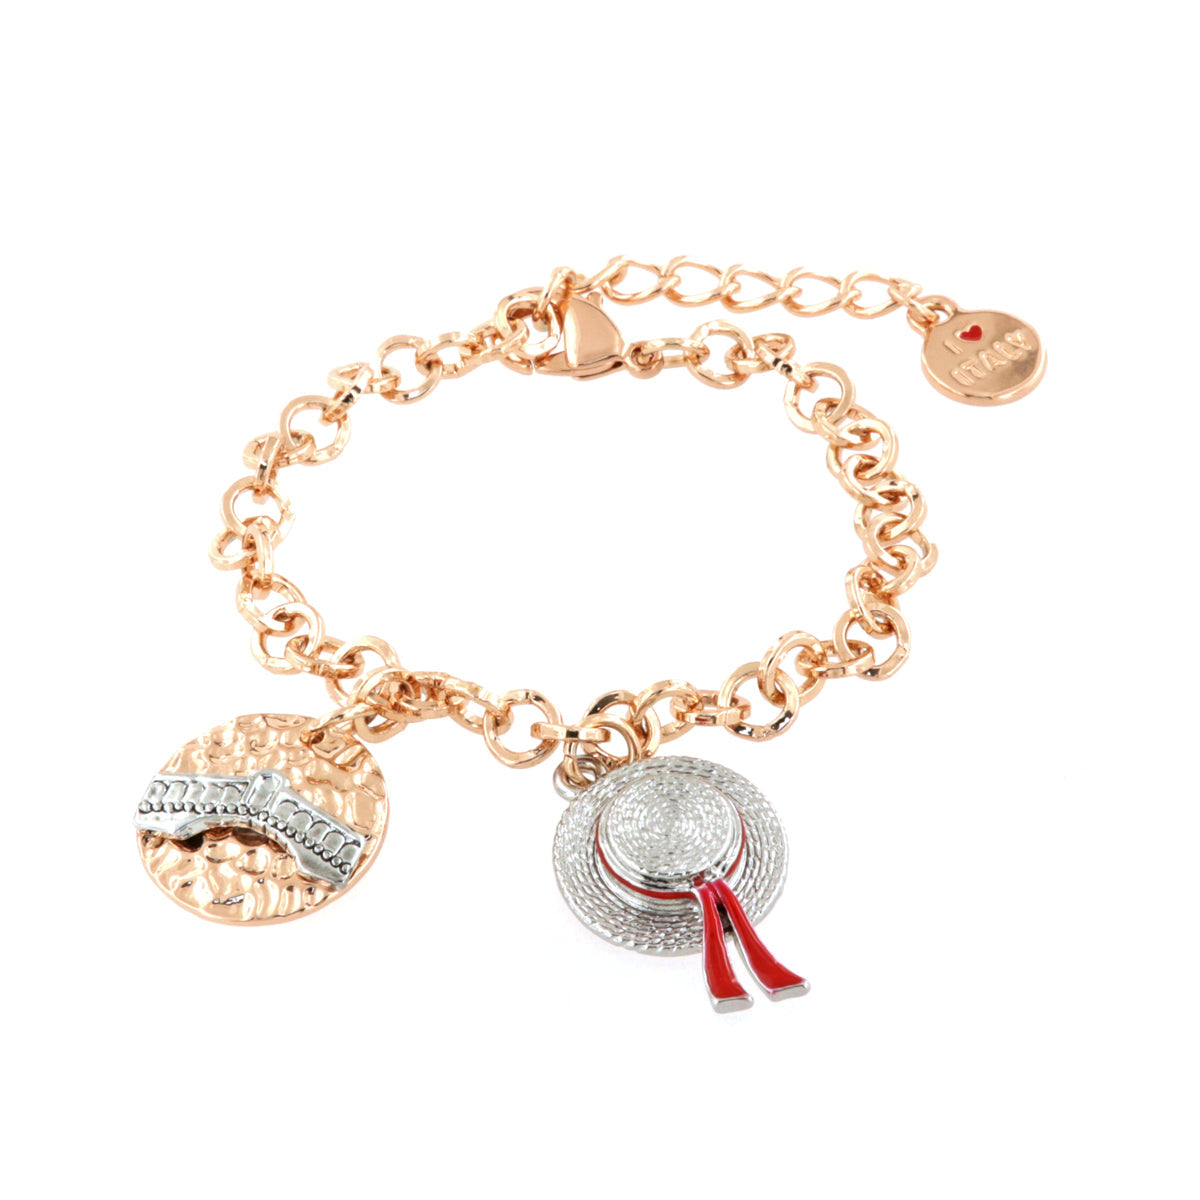 Metal bracelet symbols Venice pendants